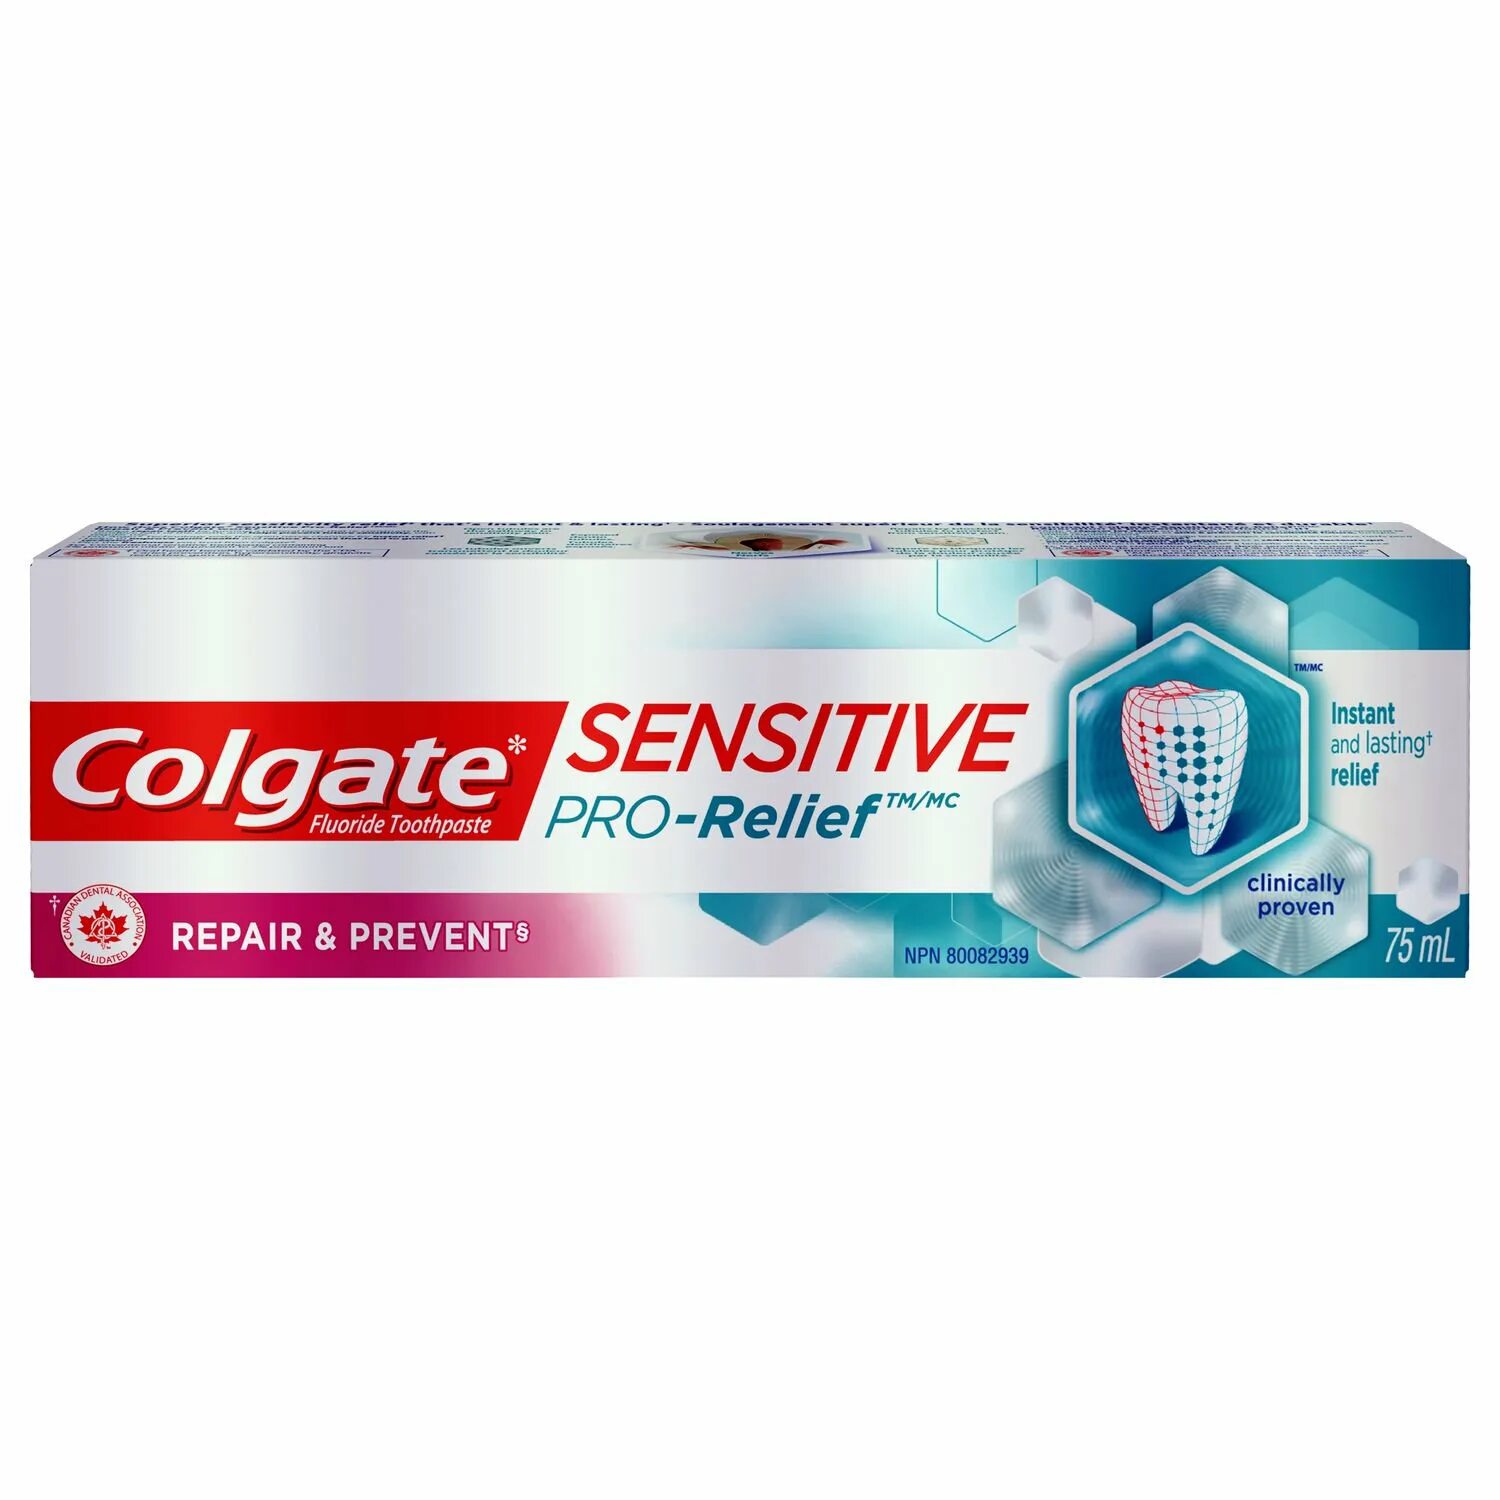 Зубная паста "Колгейт" sensitive Pro-Relief. Сенситив про релиф зубная паста. Паста Колгейт Сенситив про релиф.